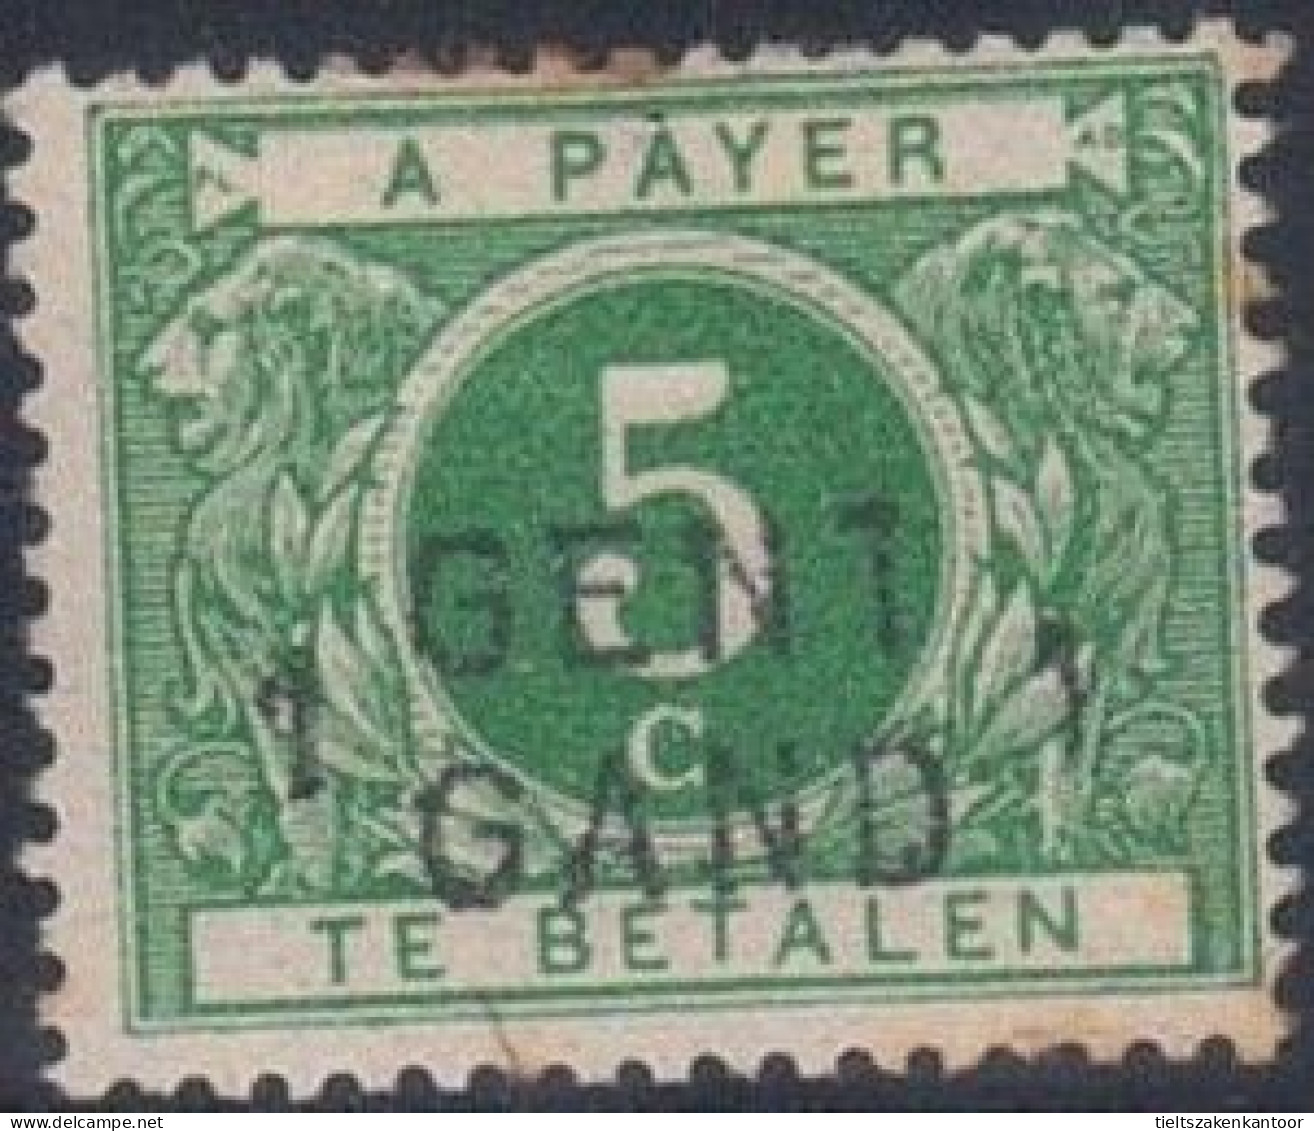 TX12 GENT - Stamps